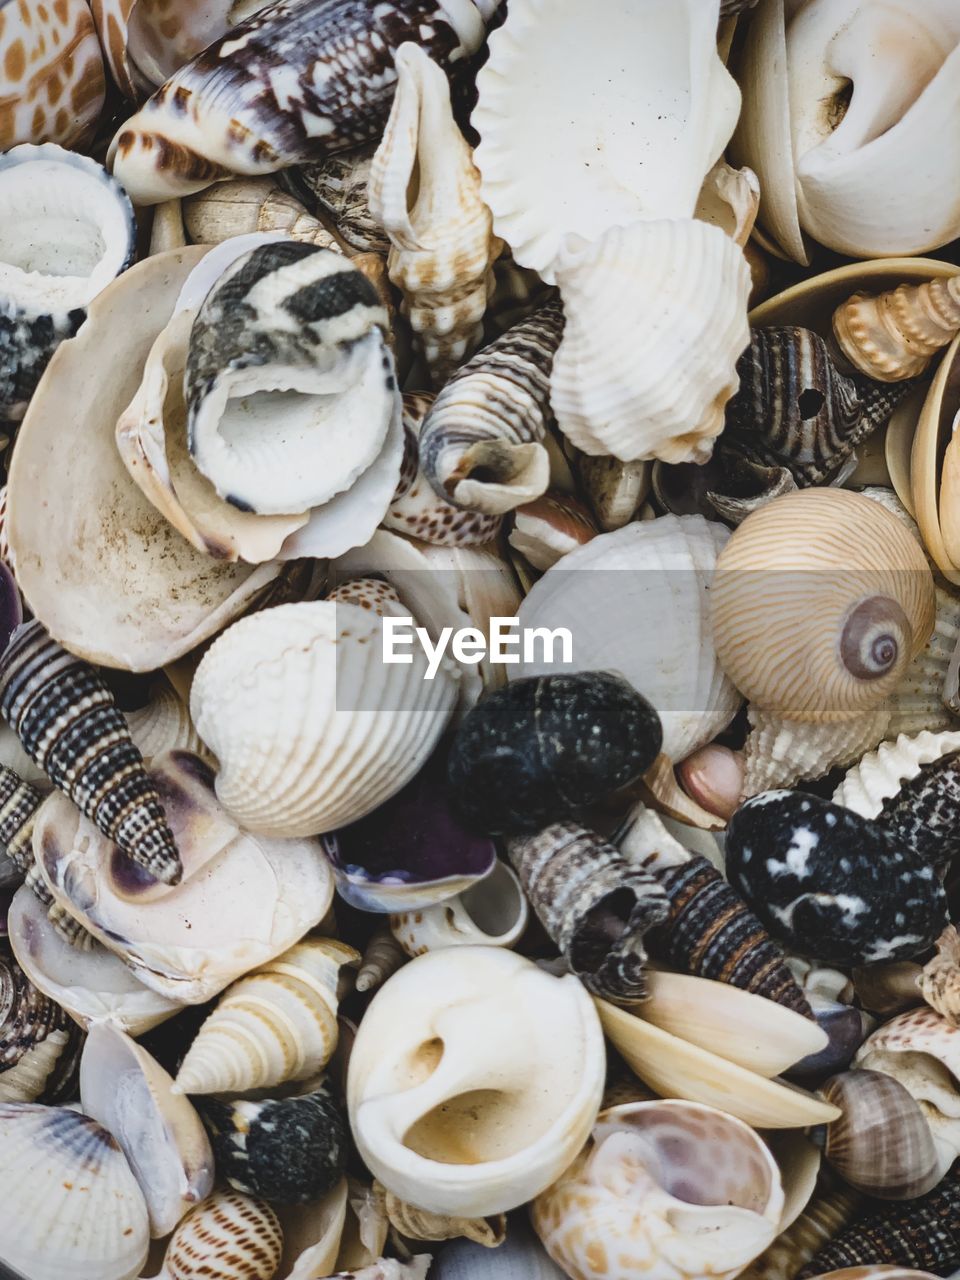 Flea market treasures. seashells background. variety of different shapes seashells